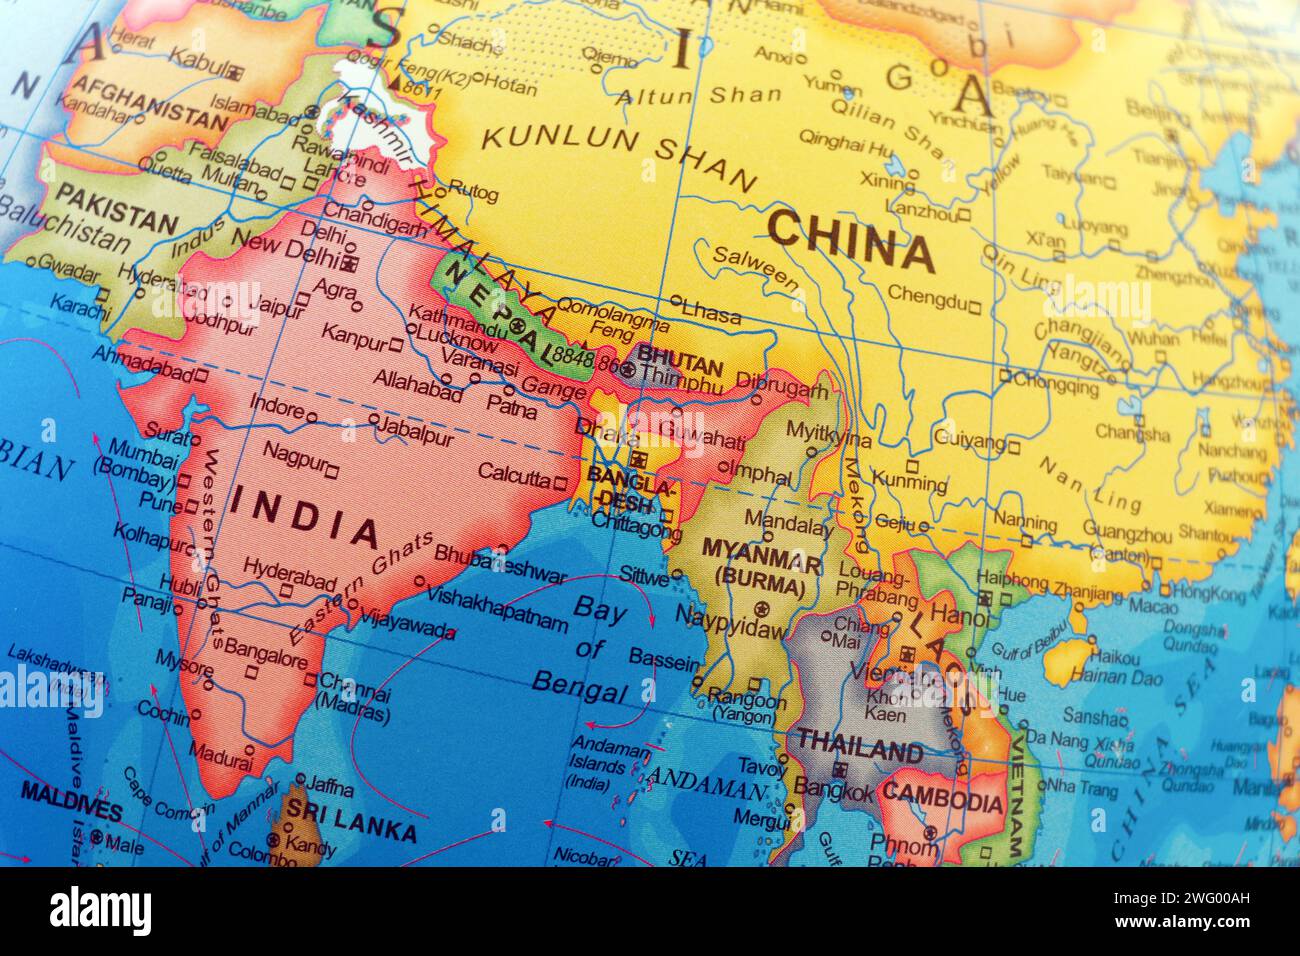 world map of india and china bordering with pakistan nepal and bangladesh Stock Photo